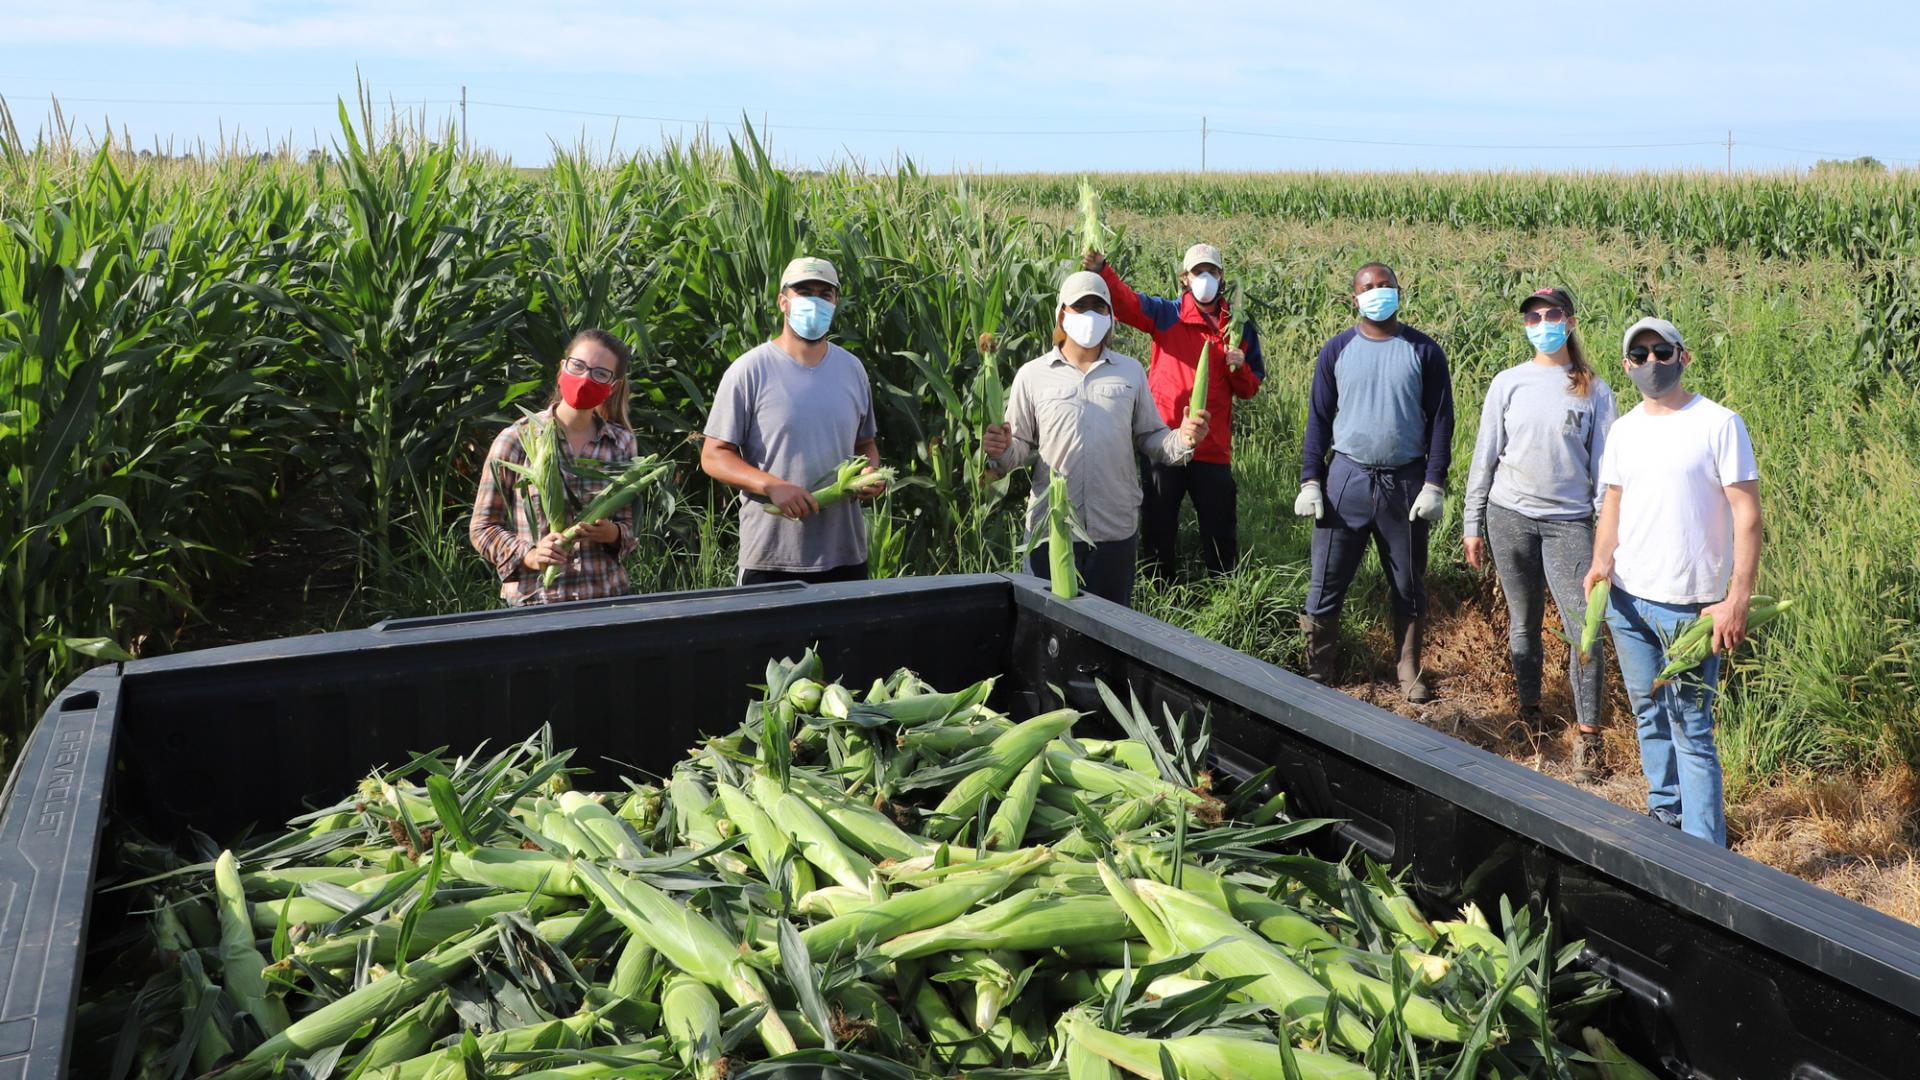 Graduate students picking sweet corn